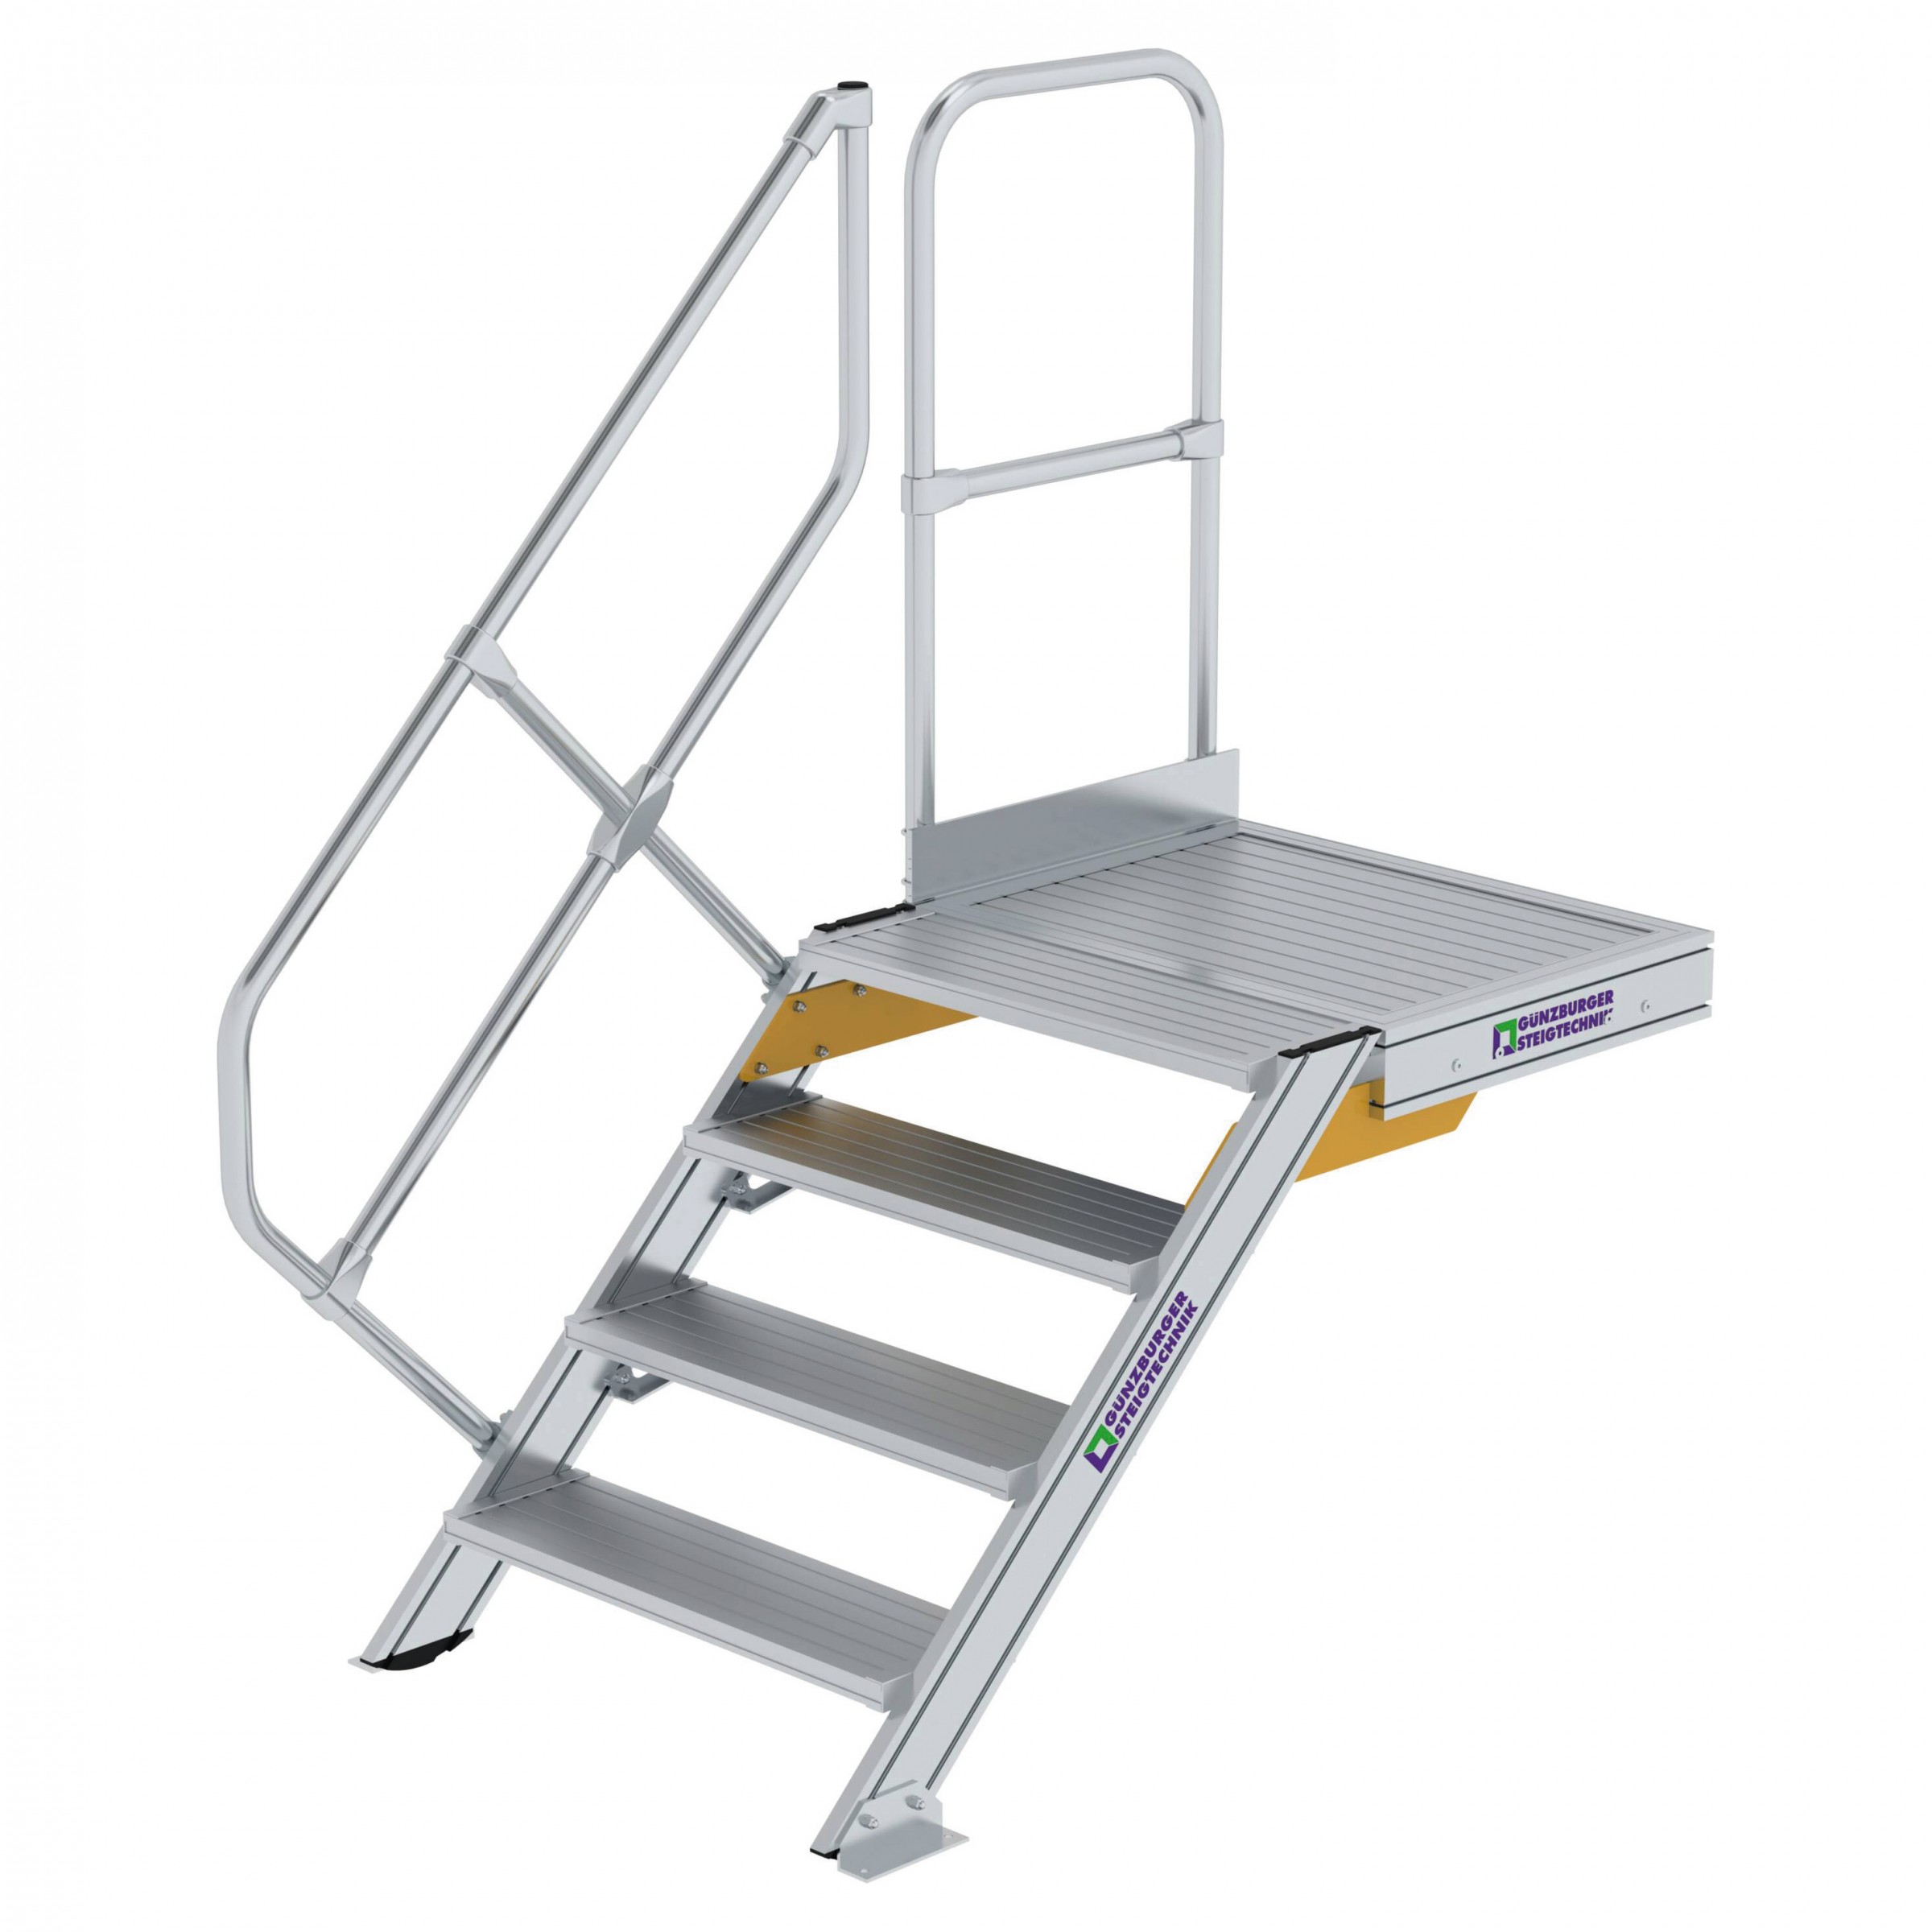 Aluminium-Treppe mit Plattform, 45°, Stufenbreite 800 mm, 4 Stufen